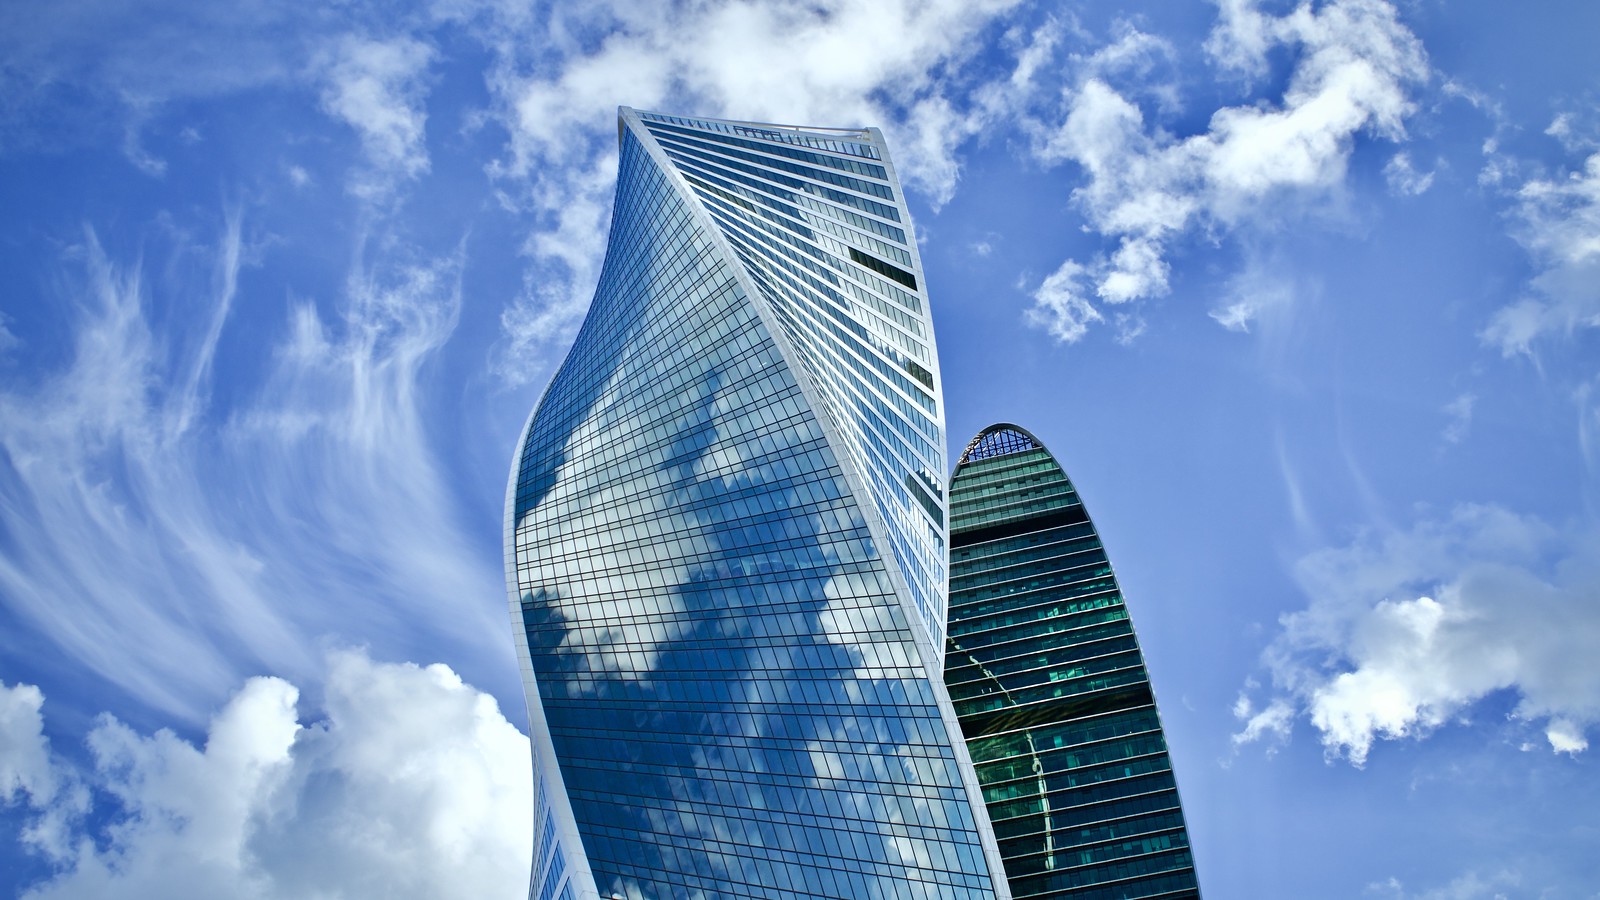 Башня Эволюция Москва Сити фото